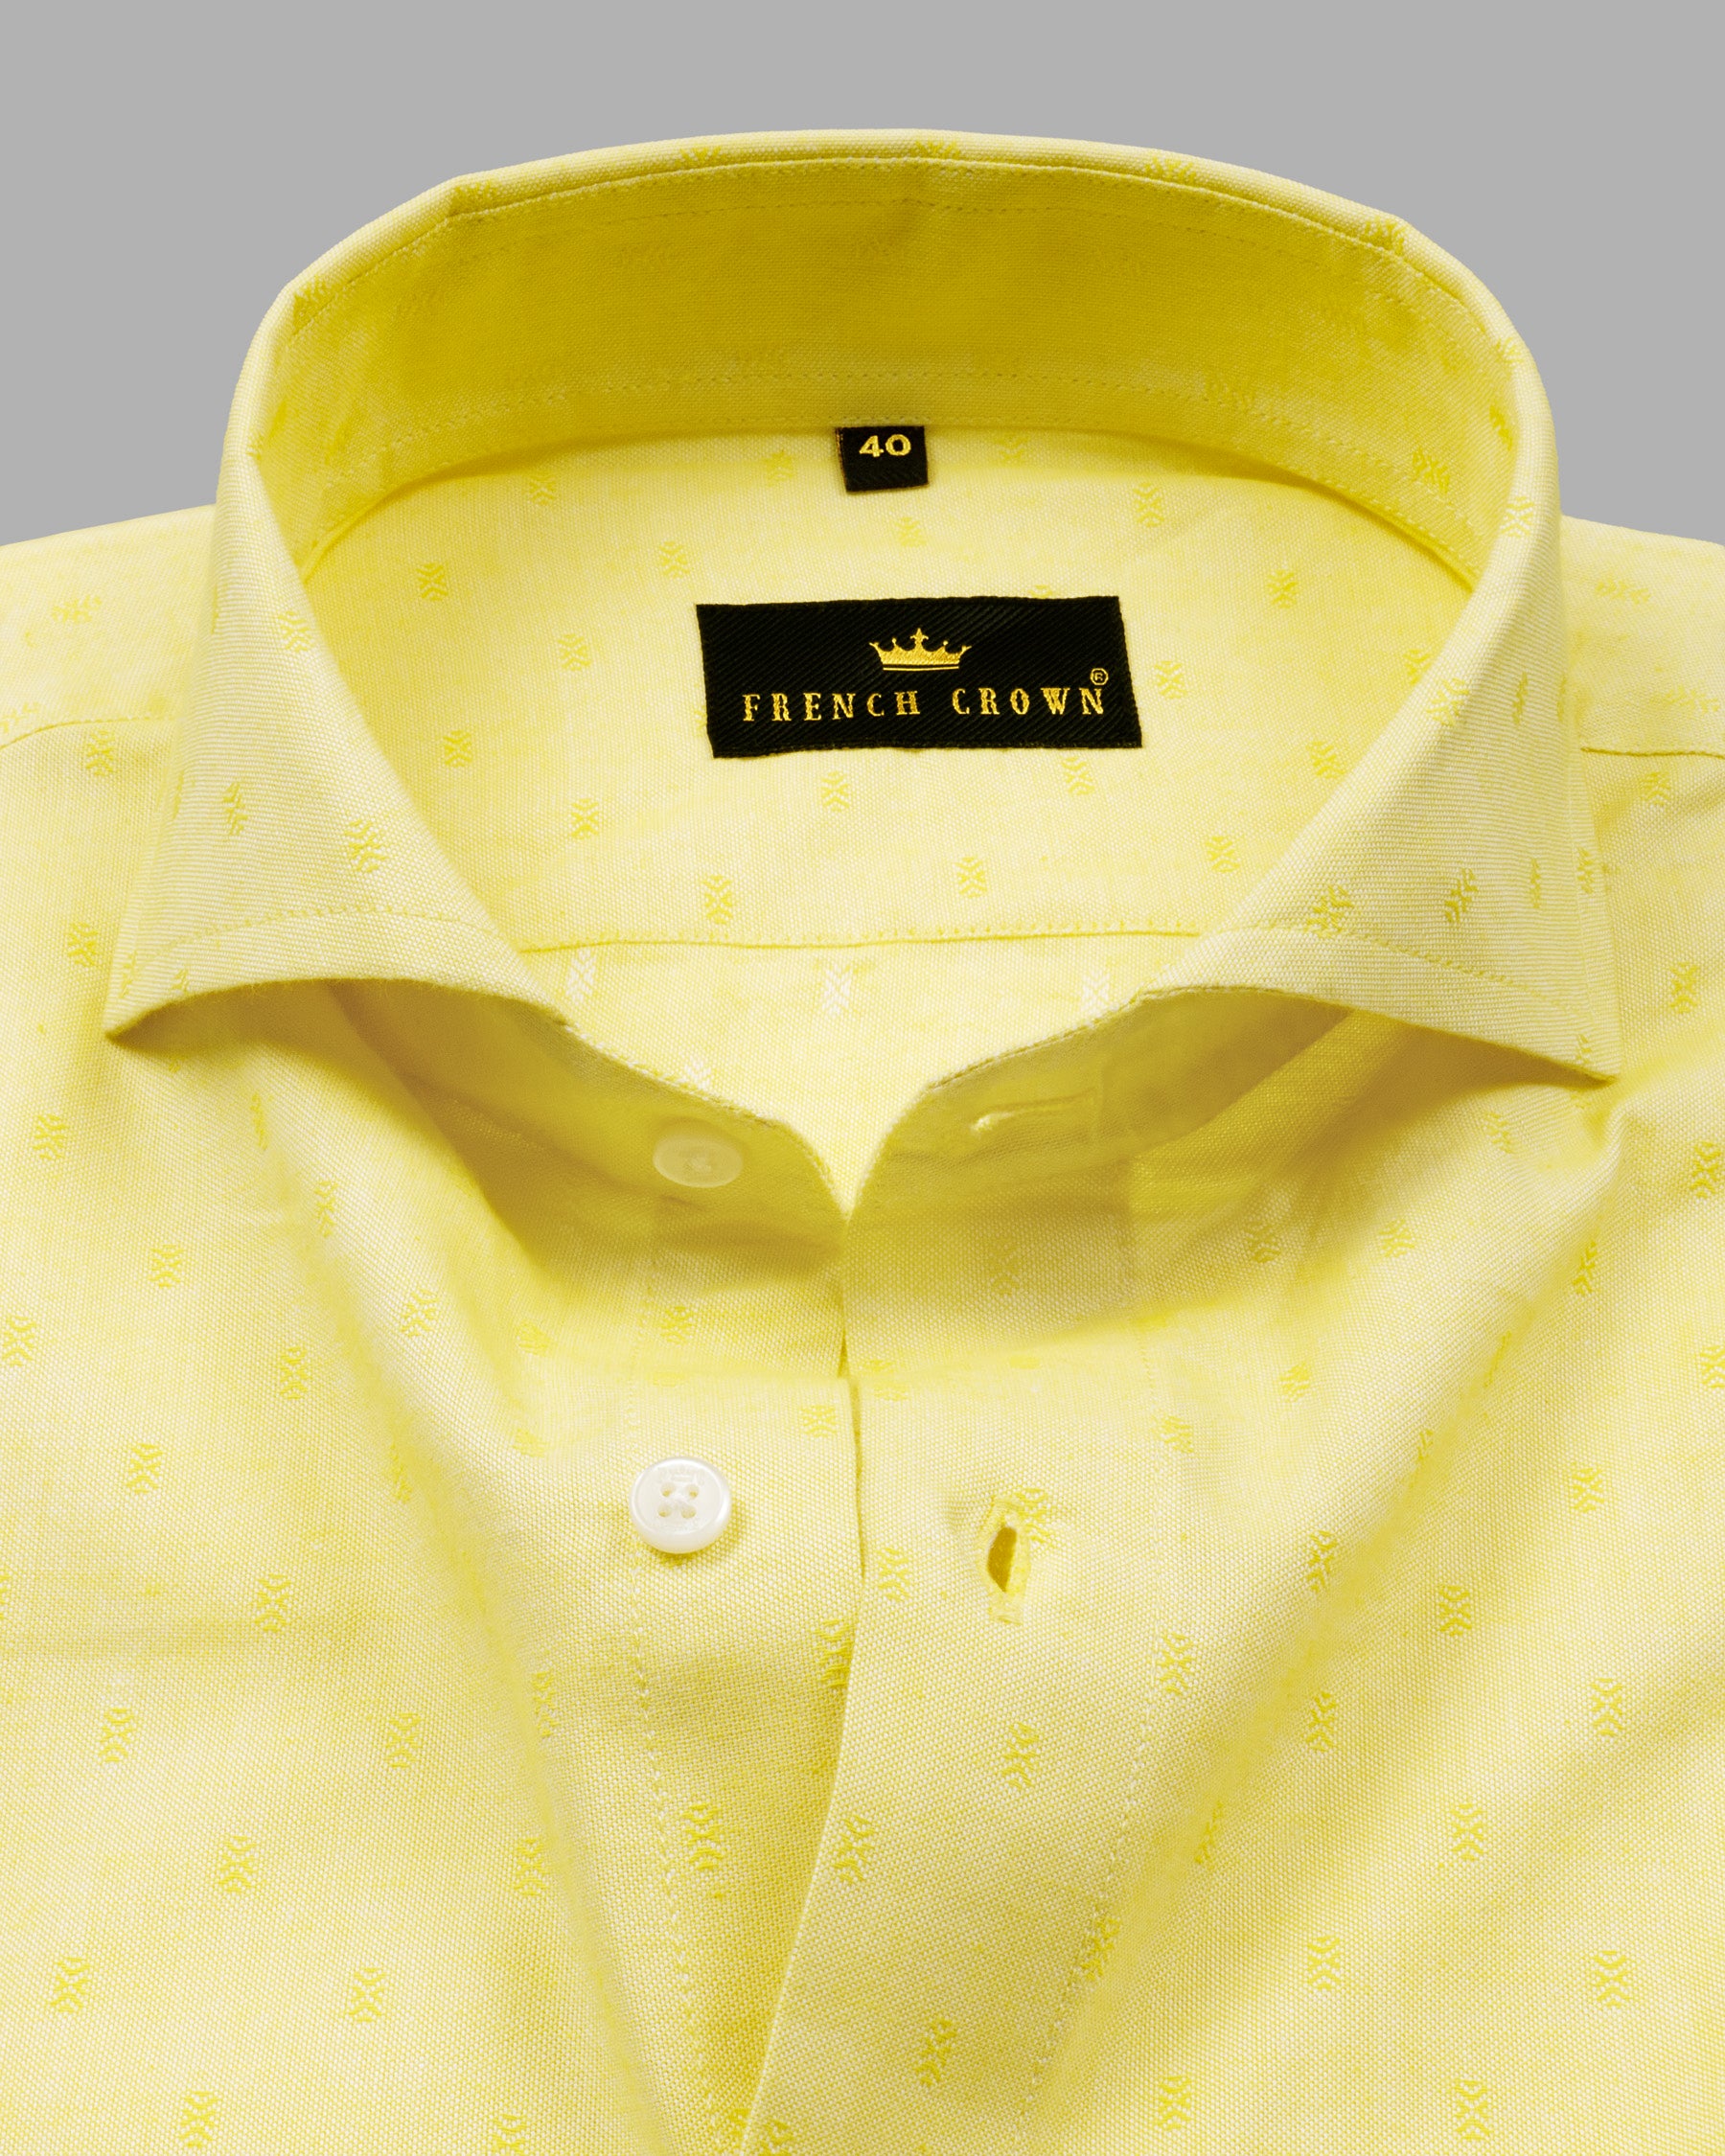 Marigold Yellow Dobby Textured Premium Giza Cotton Shirt 4719-CA-H-38, 4719-CA-39, 4719-CA-H-39, 4719-CA-40, 4719-CA-H-40, 4719-CA-42, 4719-CA-H-42, 4719-CA-44, 4719-CA-H-44, 4719-CA-46, 4719-CA-H-46, 4719-CA-48, 4719-CA-H-48, 4719-CA-50, 4719-CA-H-50, 4719-CA-52, 4719-CA-H-52, 4719-CA-38